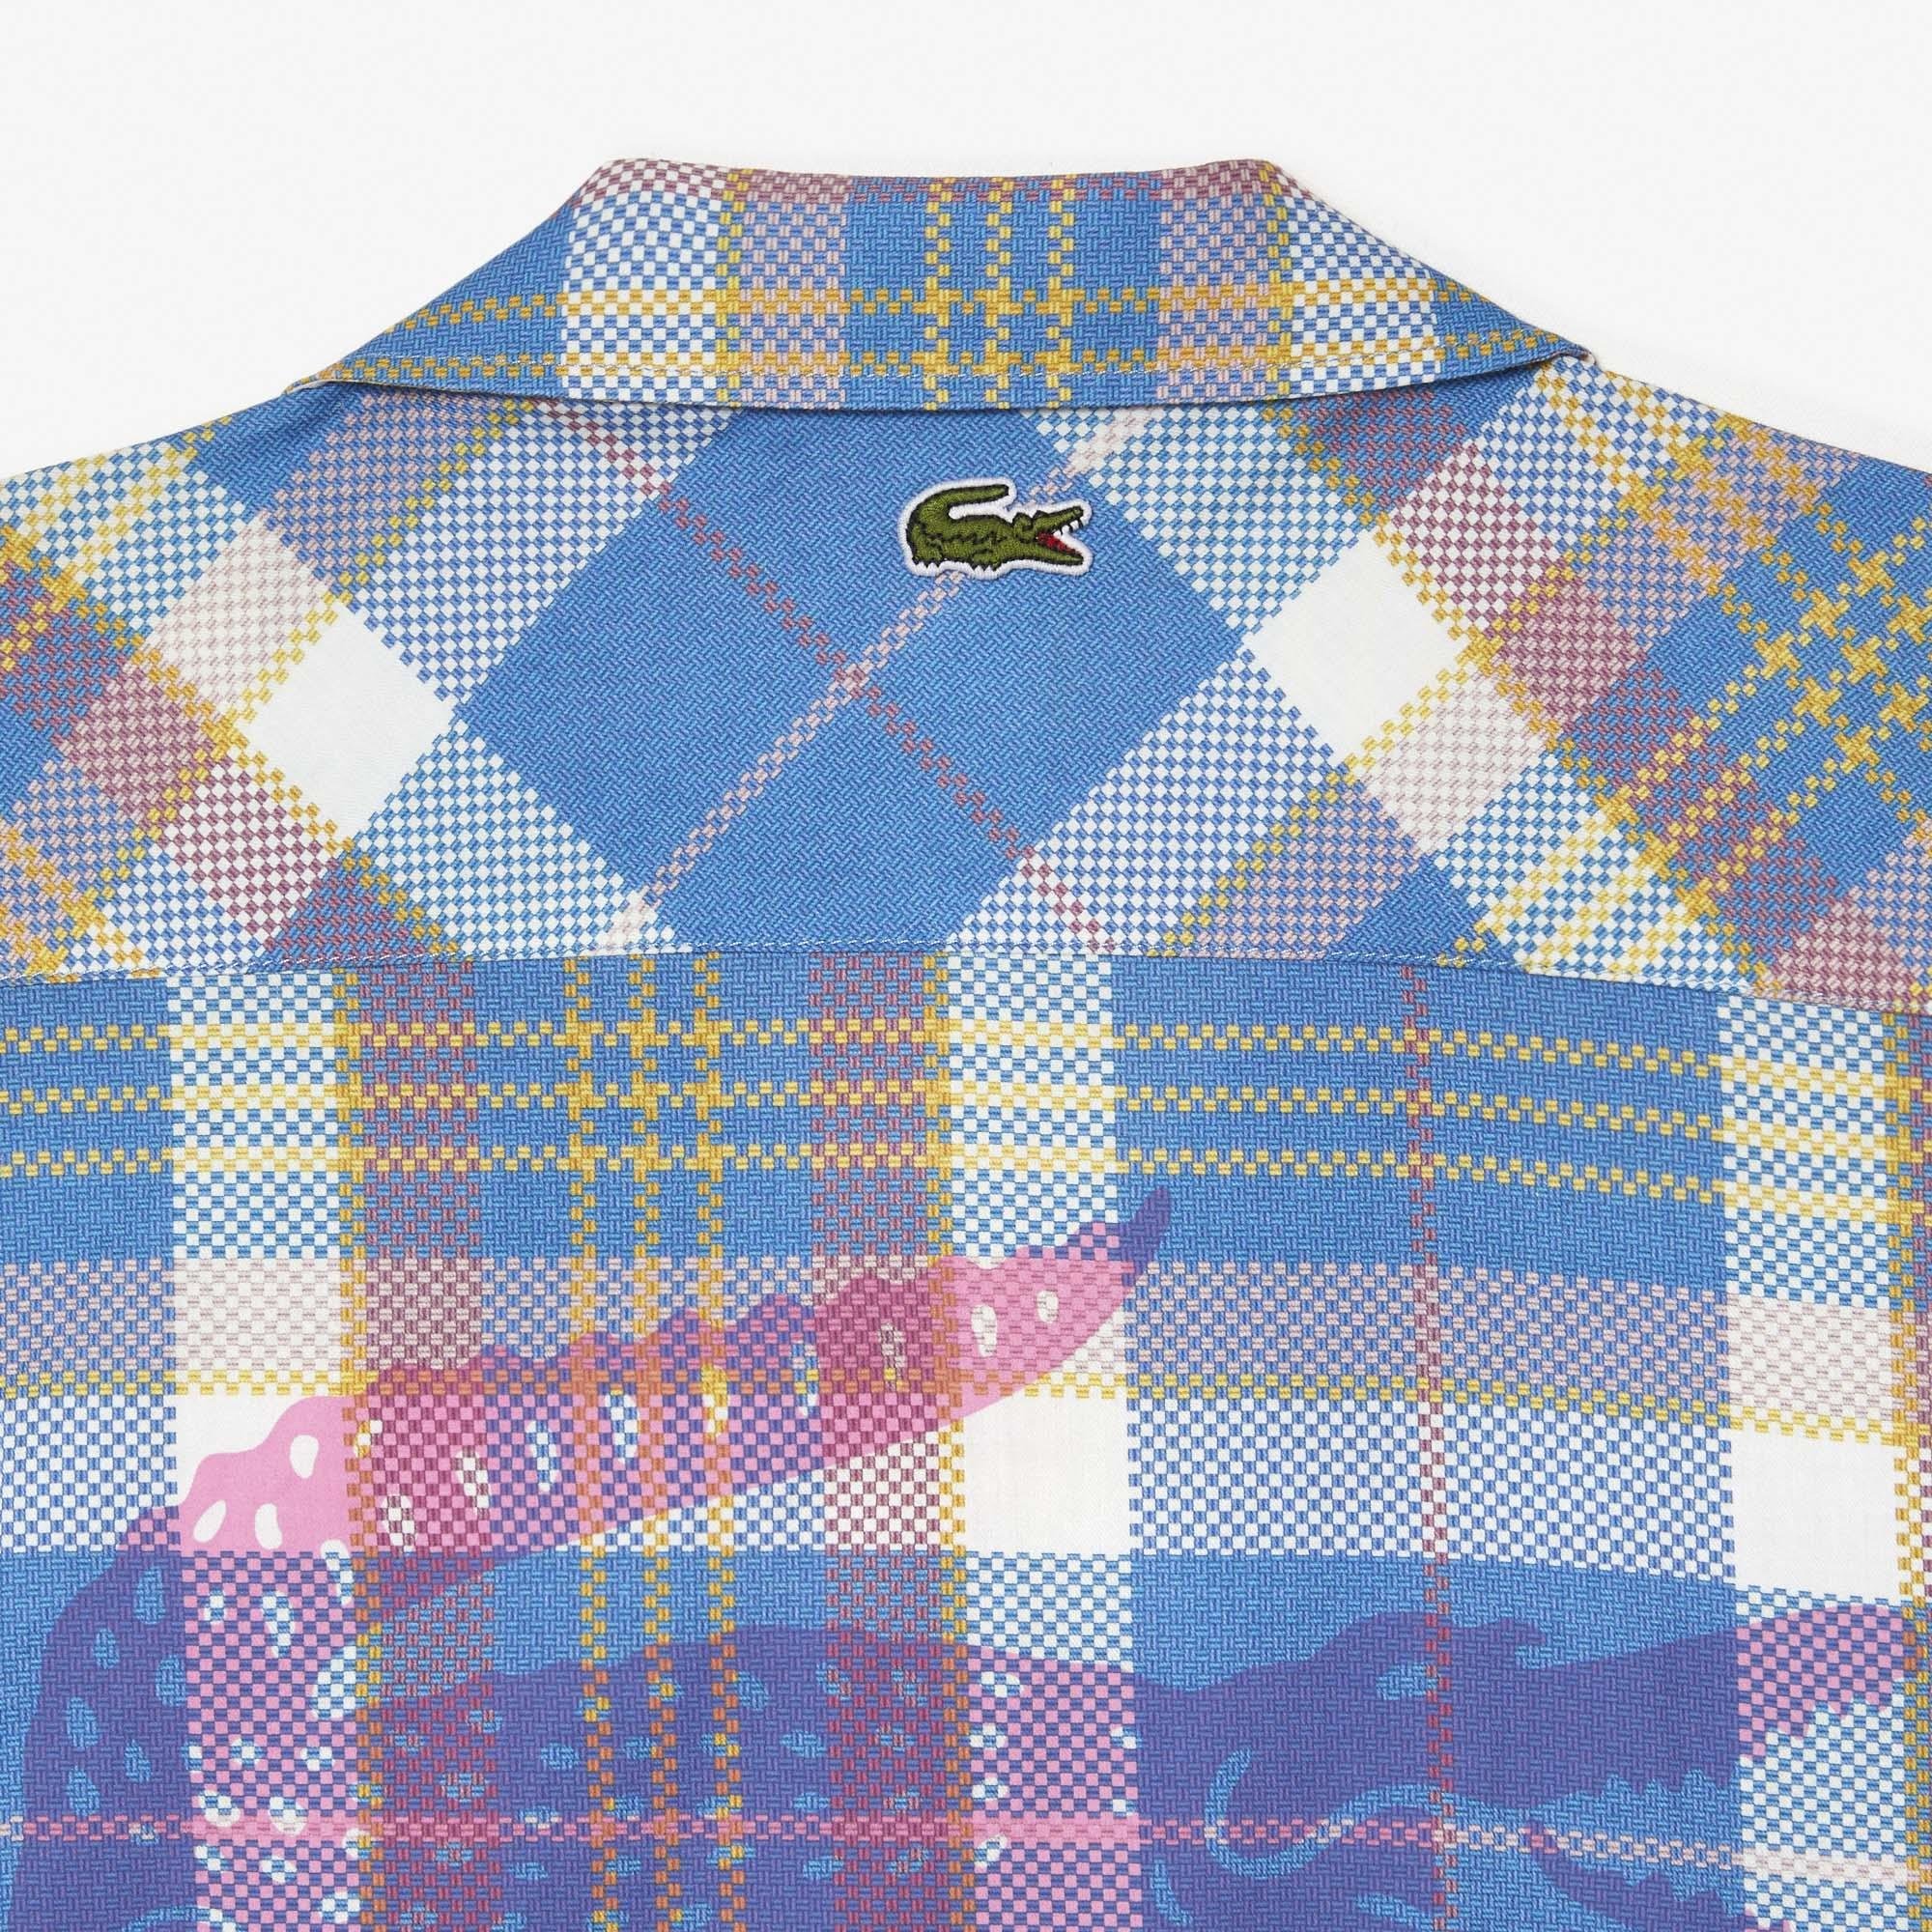 Lacoste Men’s  Short Sleeve Organic Cotton Check Shirt